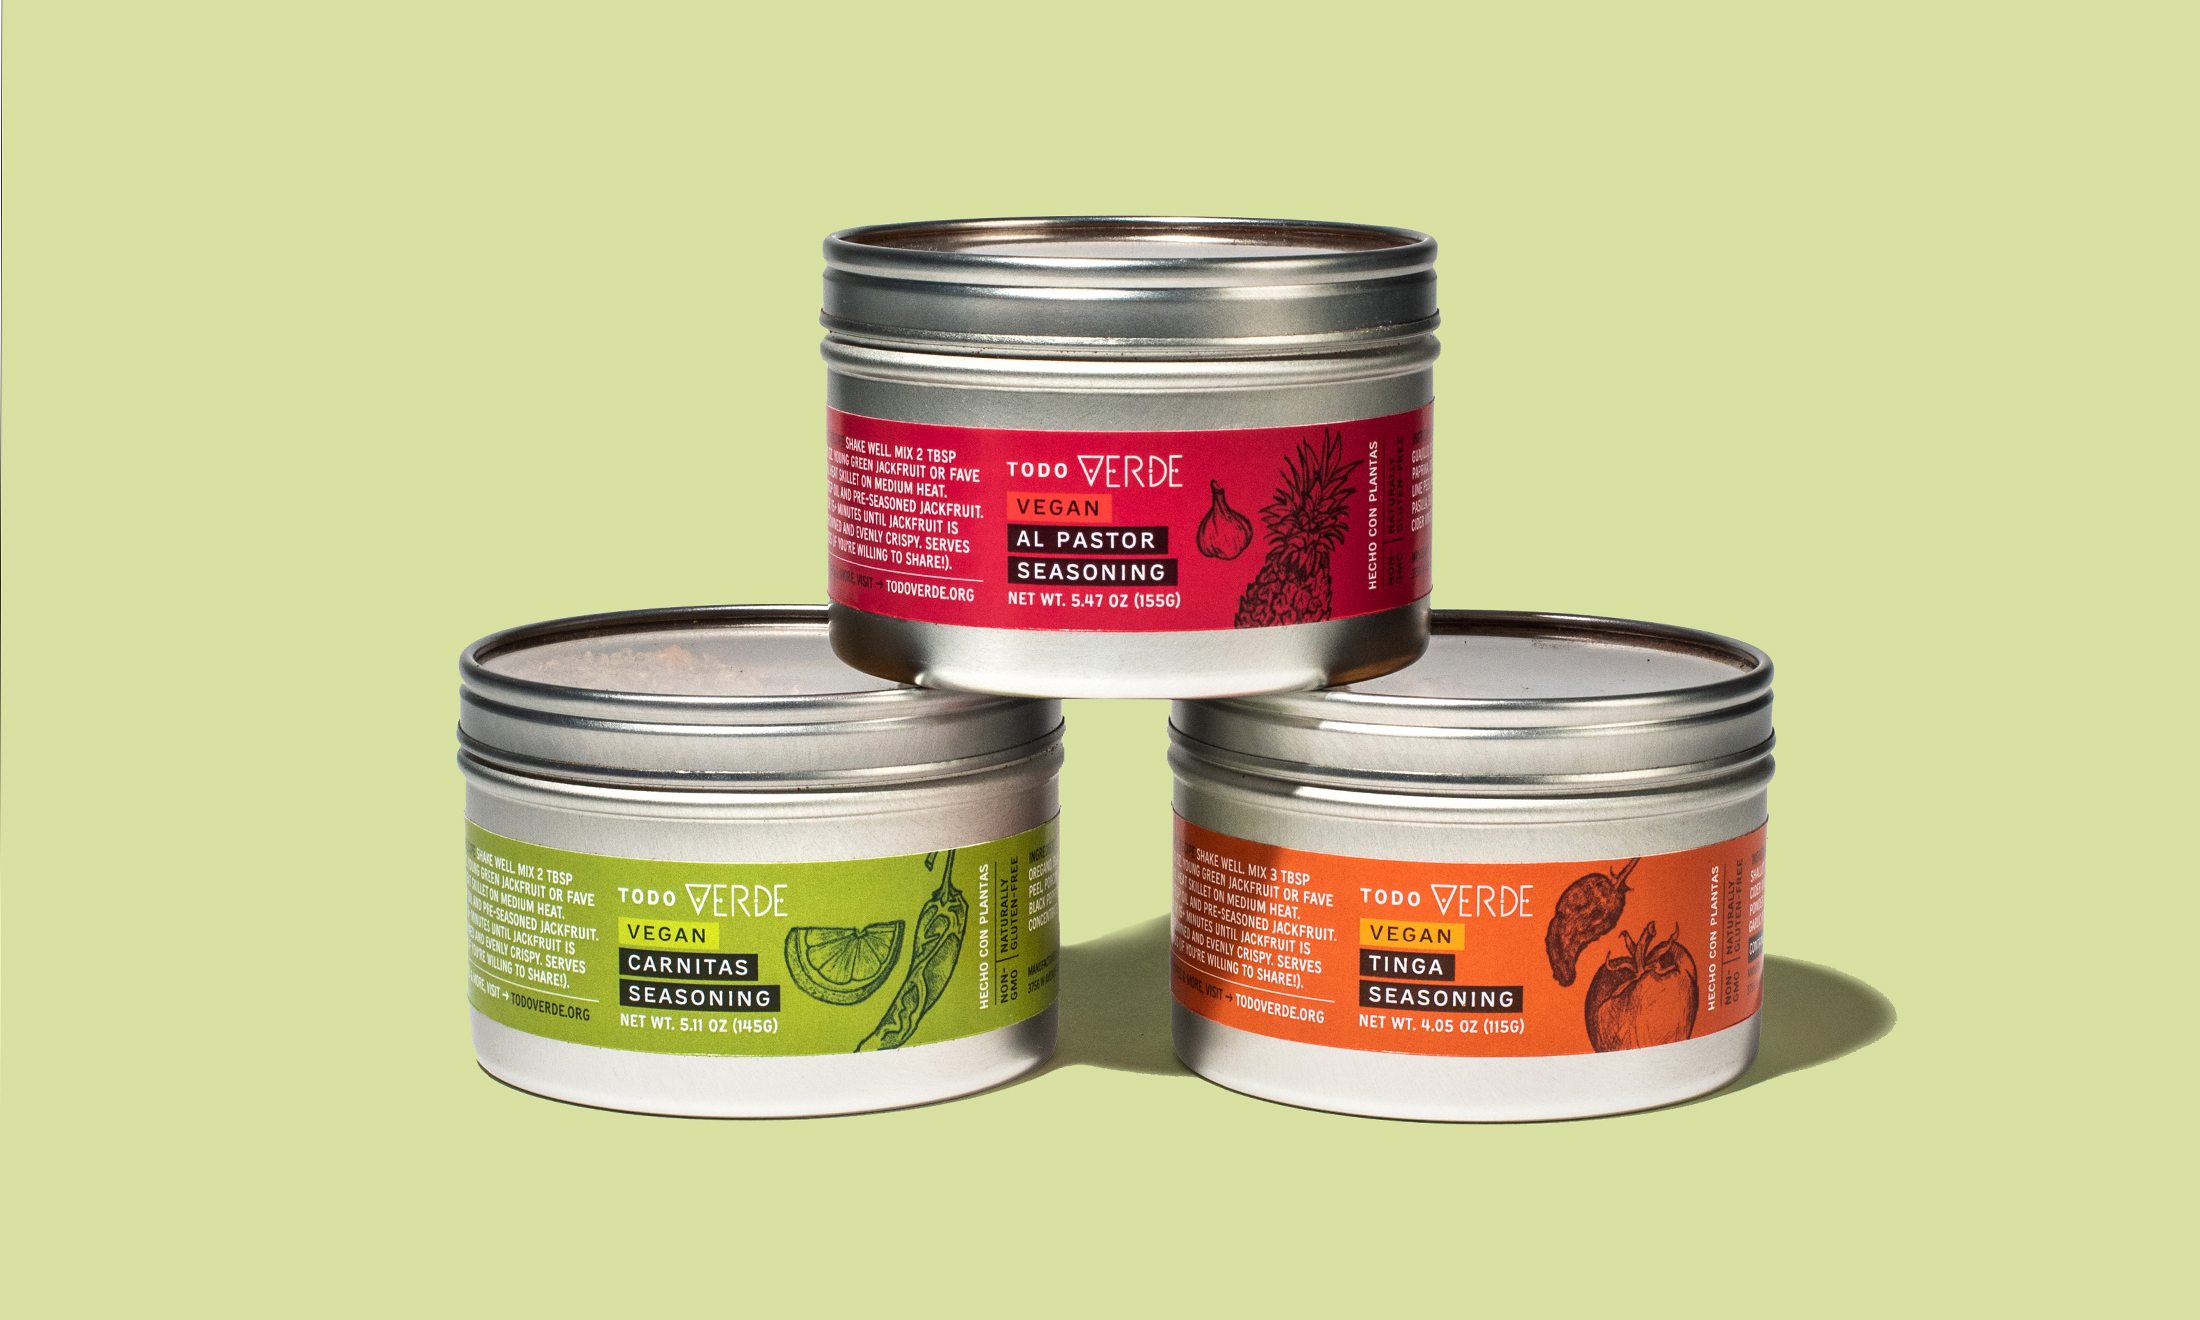 Todo Verde Seasoning Tins with packaging designed by Kilter